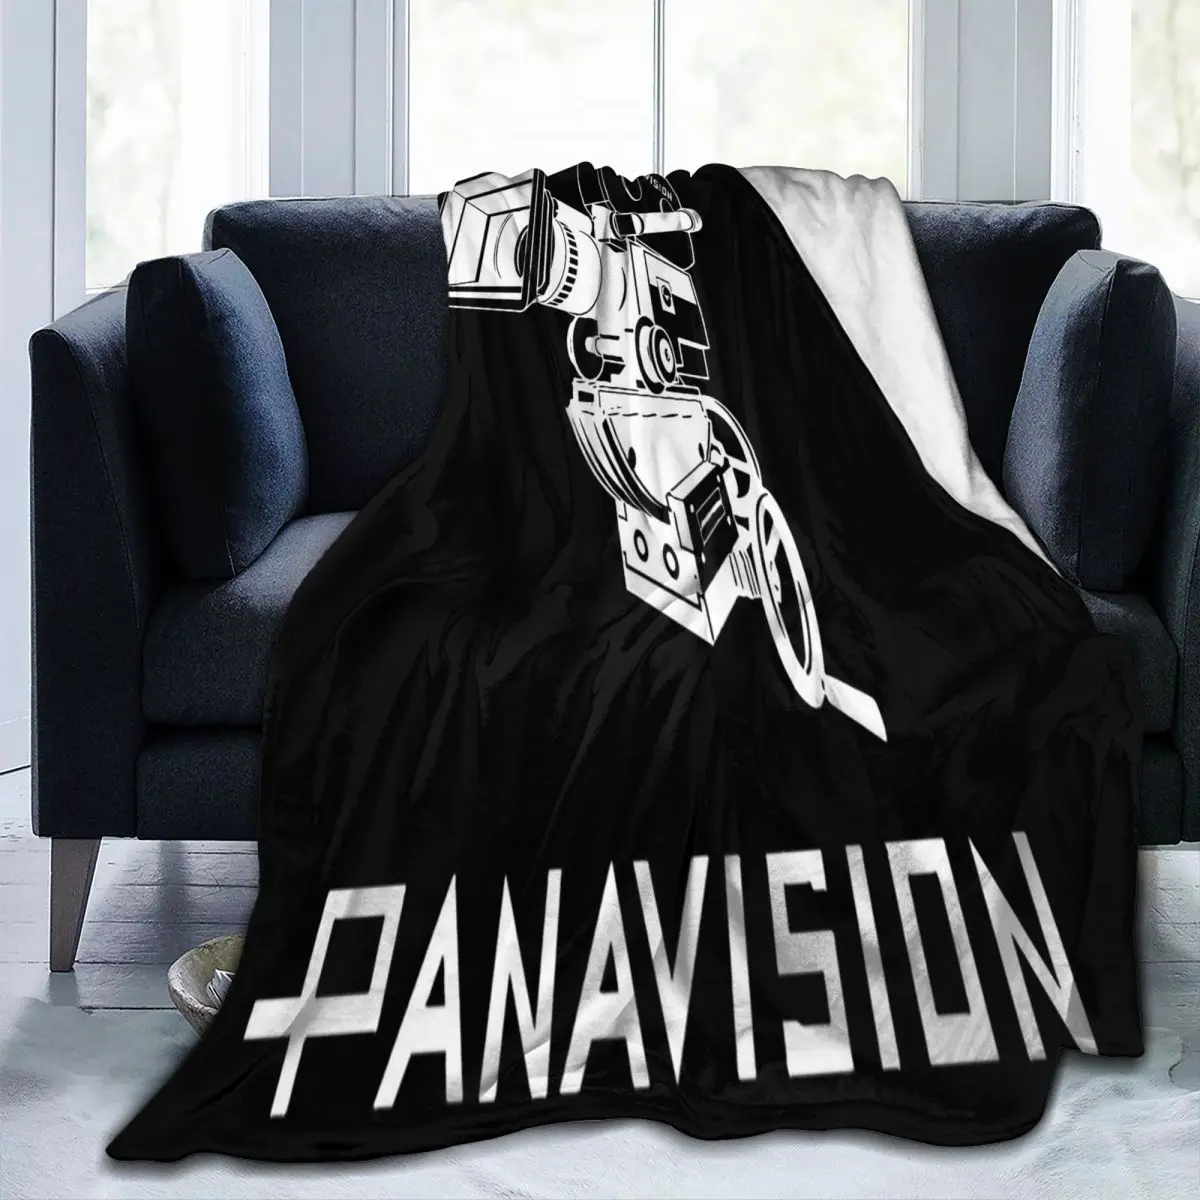 

Panavision Film Crew Camera Filmen Mannen Tops Throw Blanket Trendy Portable Suitable For Sofa AntiPilling